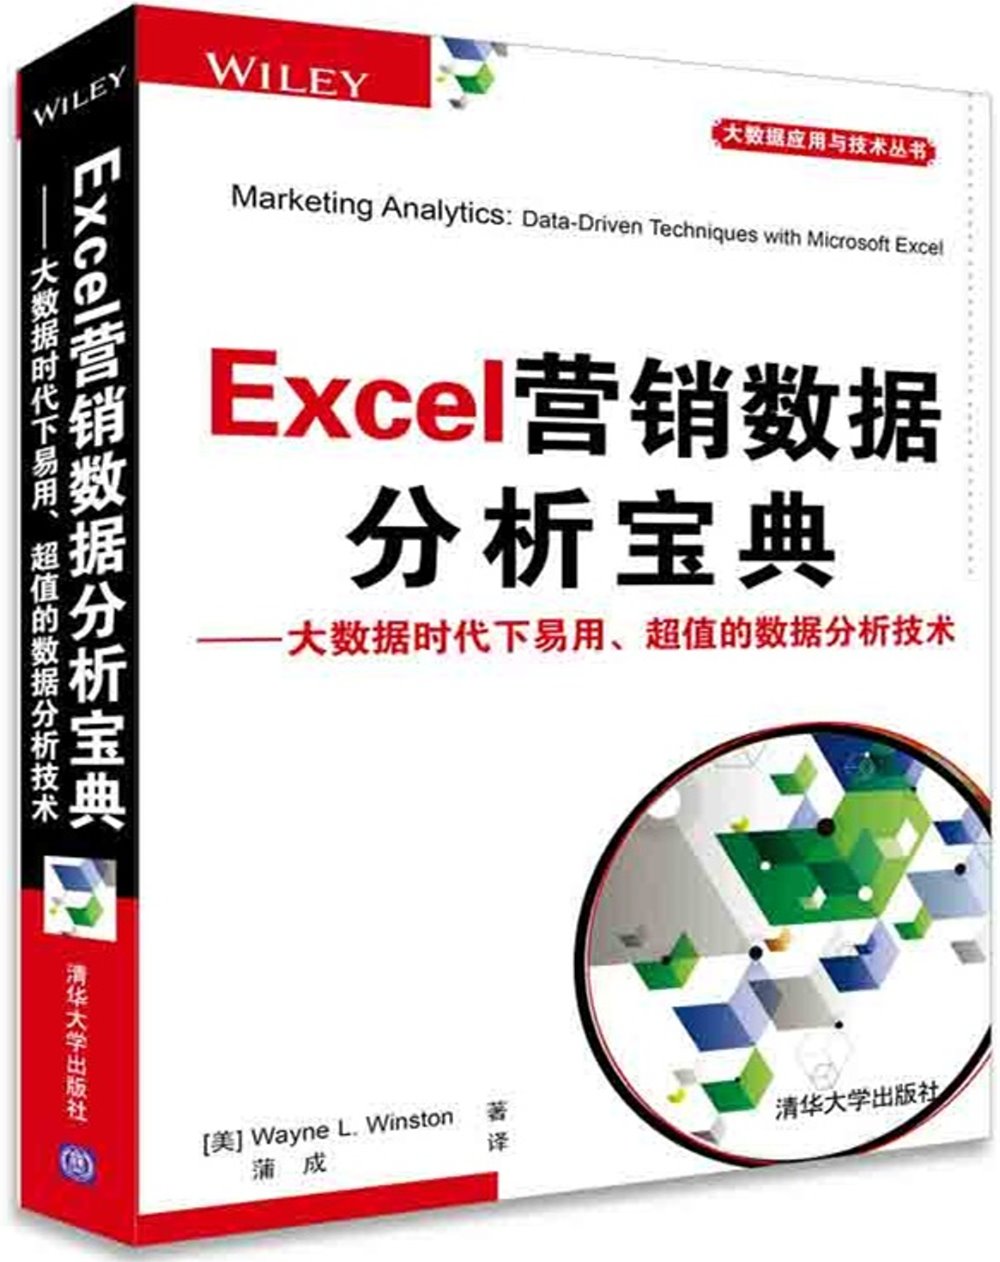 Excel營銷數據分析寶典--大數據時代下易用、超值的數據分析技術